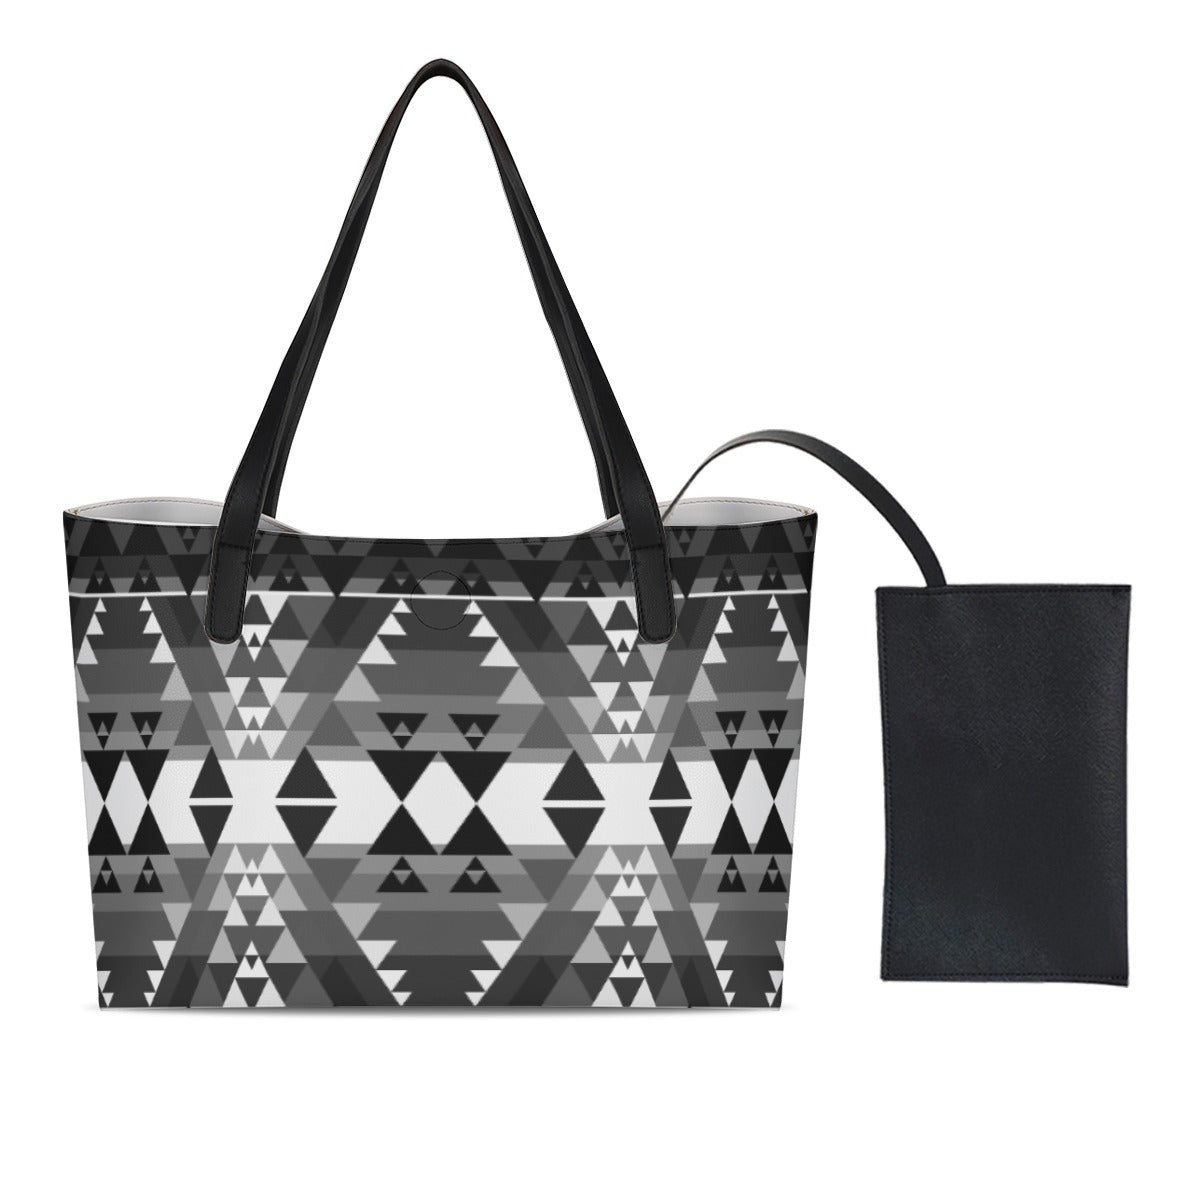 Shopping Tote Bag With Black Mini Purse